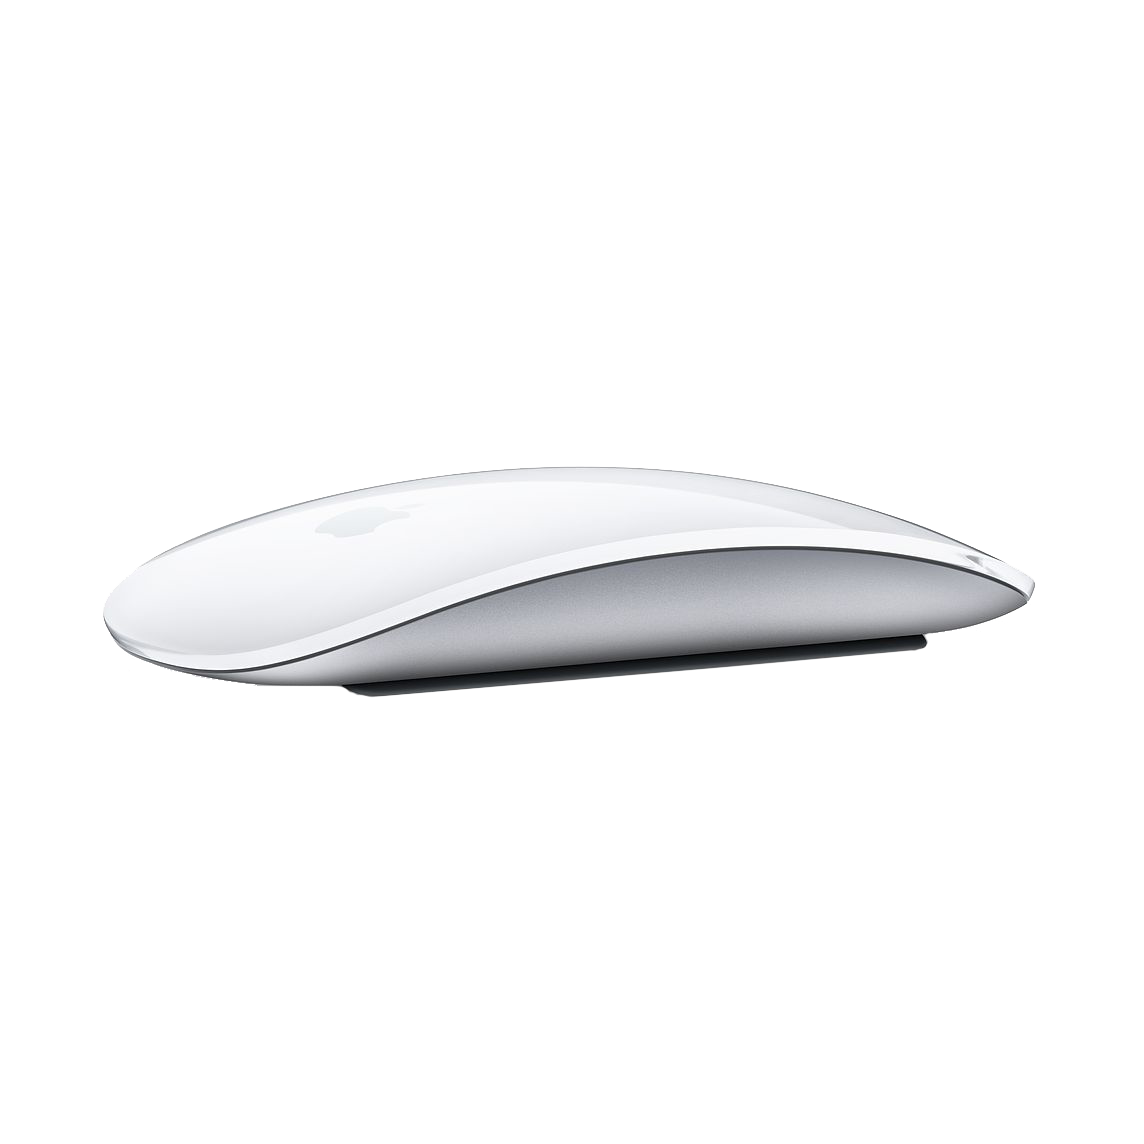 Refurbished Apple Magic Mouse 1 - test-product-media-liquid1